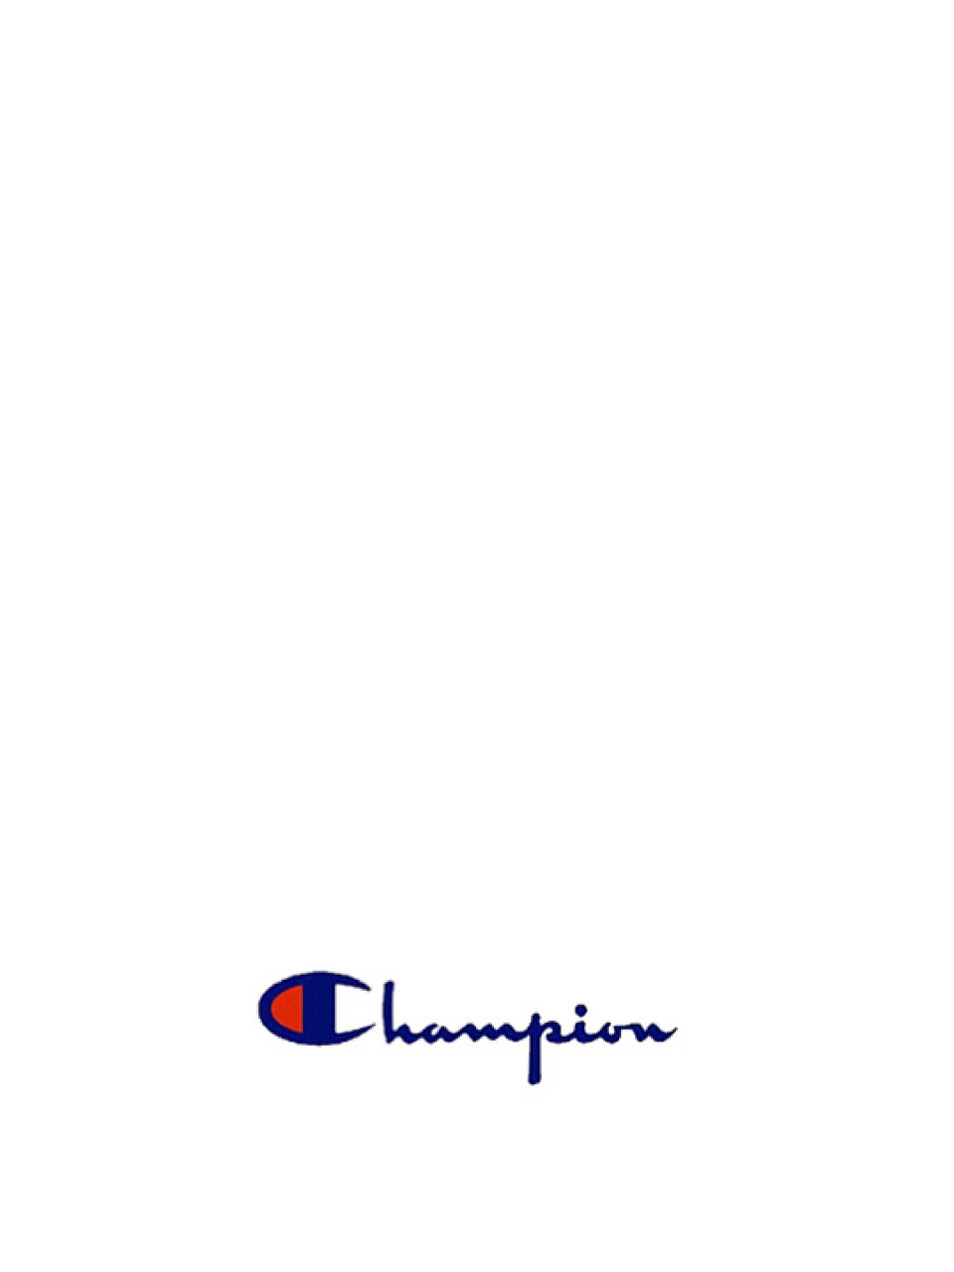 Champion壁紙の画像4点 完全無料画像検索のプリ画像 Bygmo